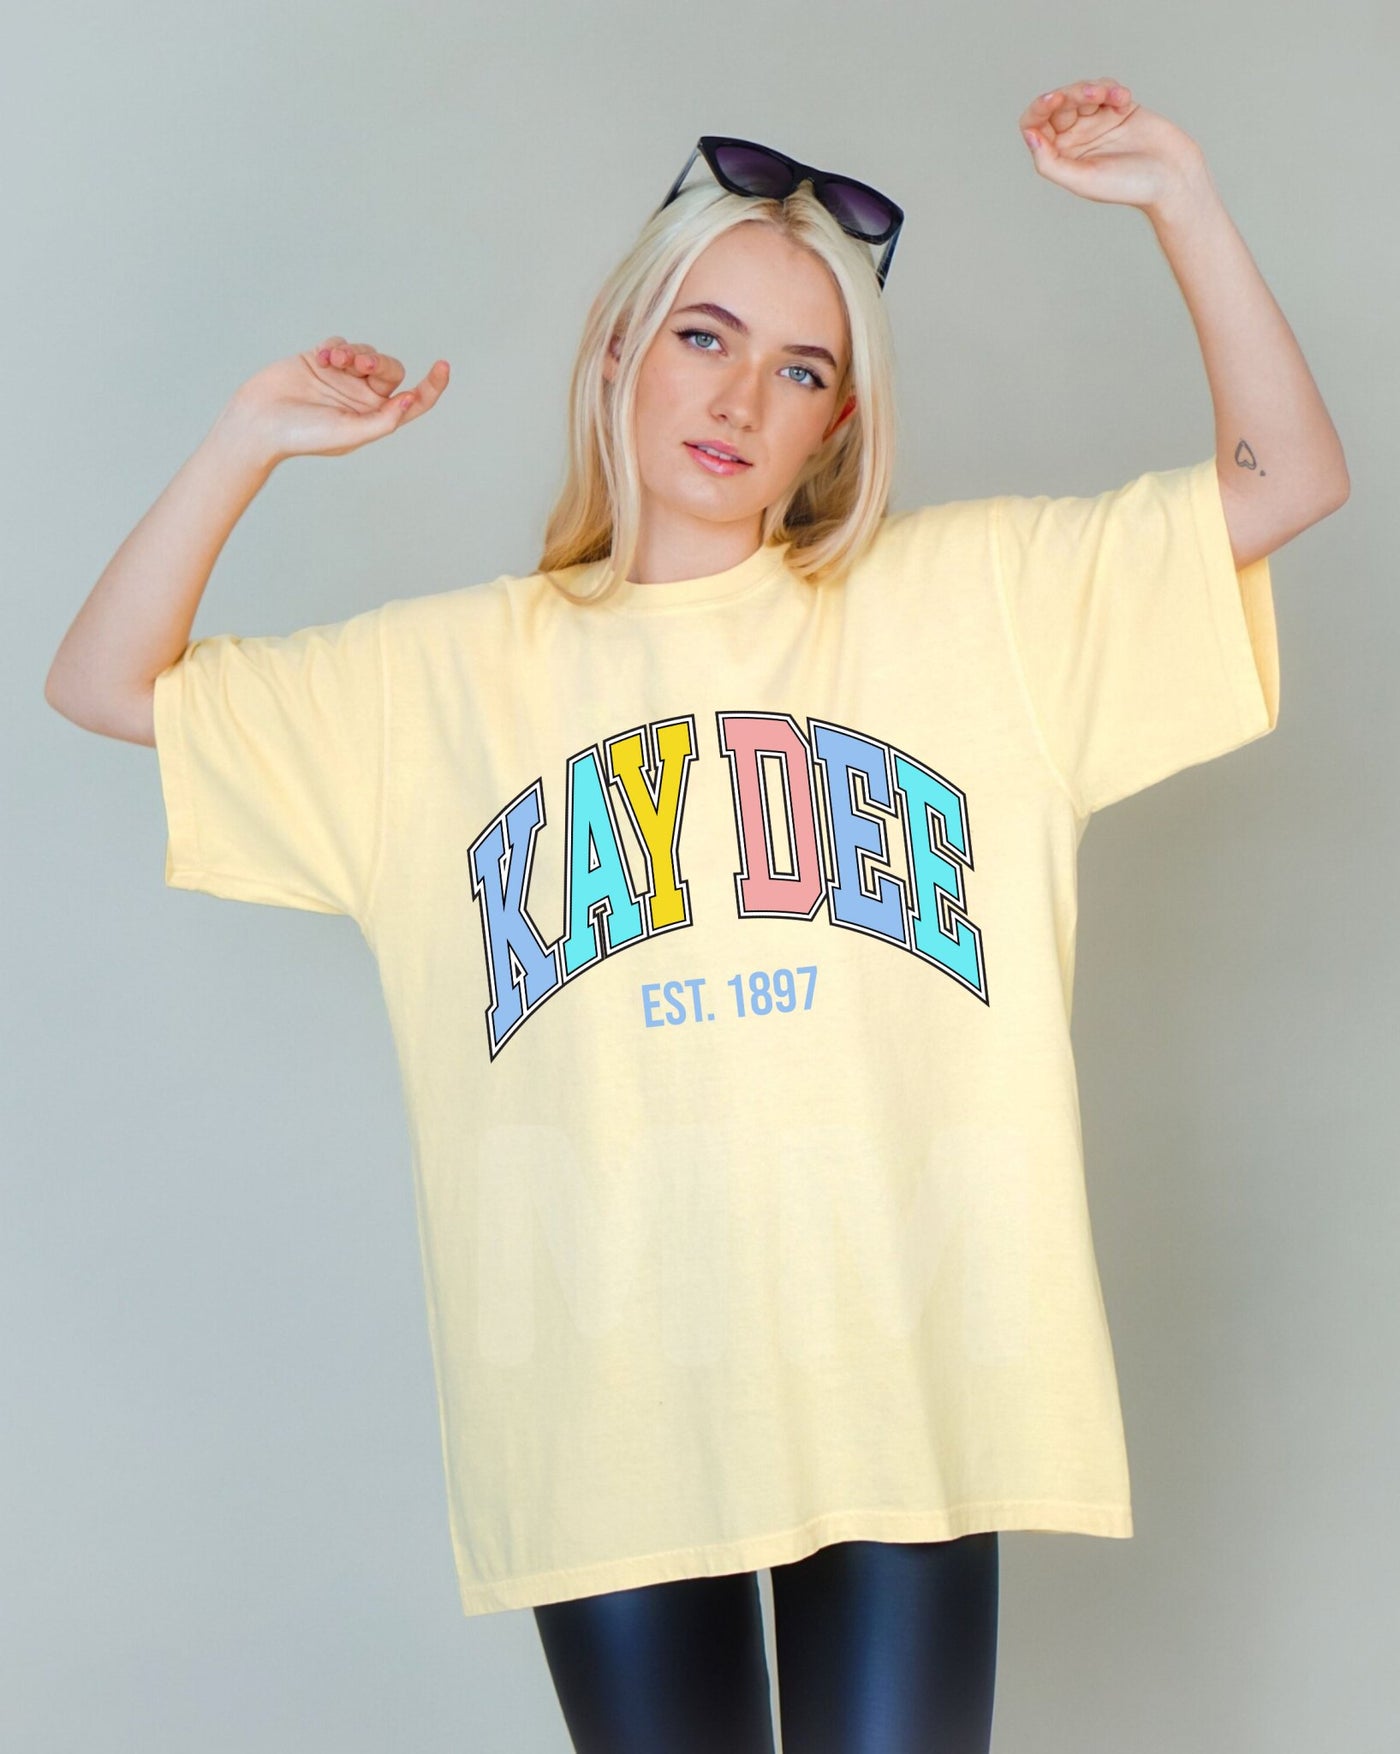 Kappa Delta Pastel Varsity Sorority T-shirt